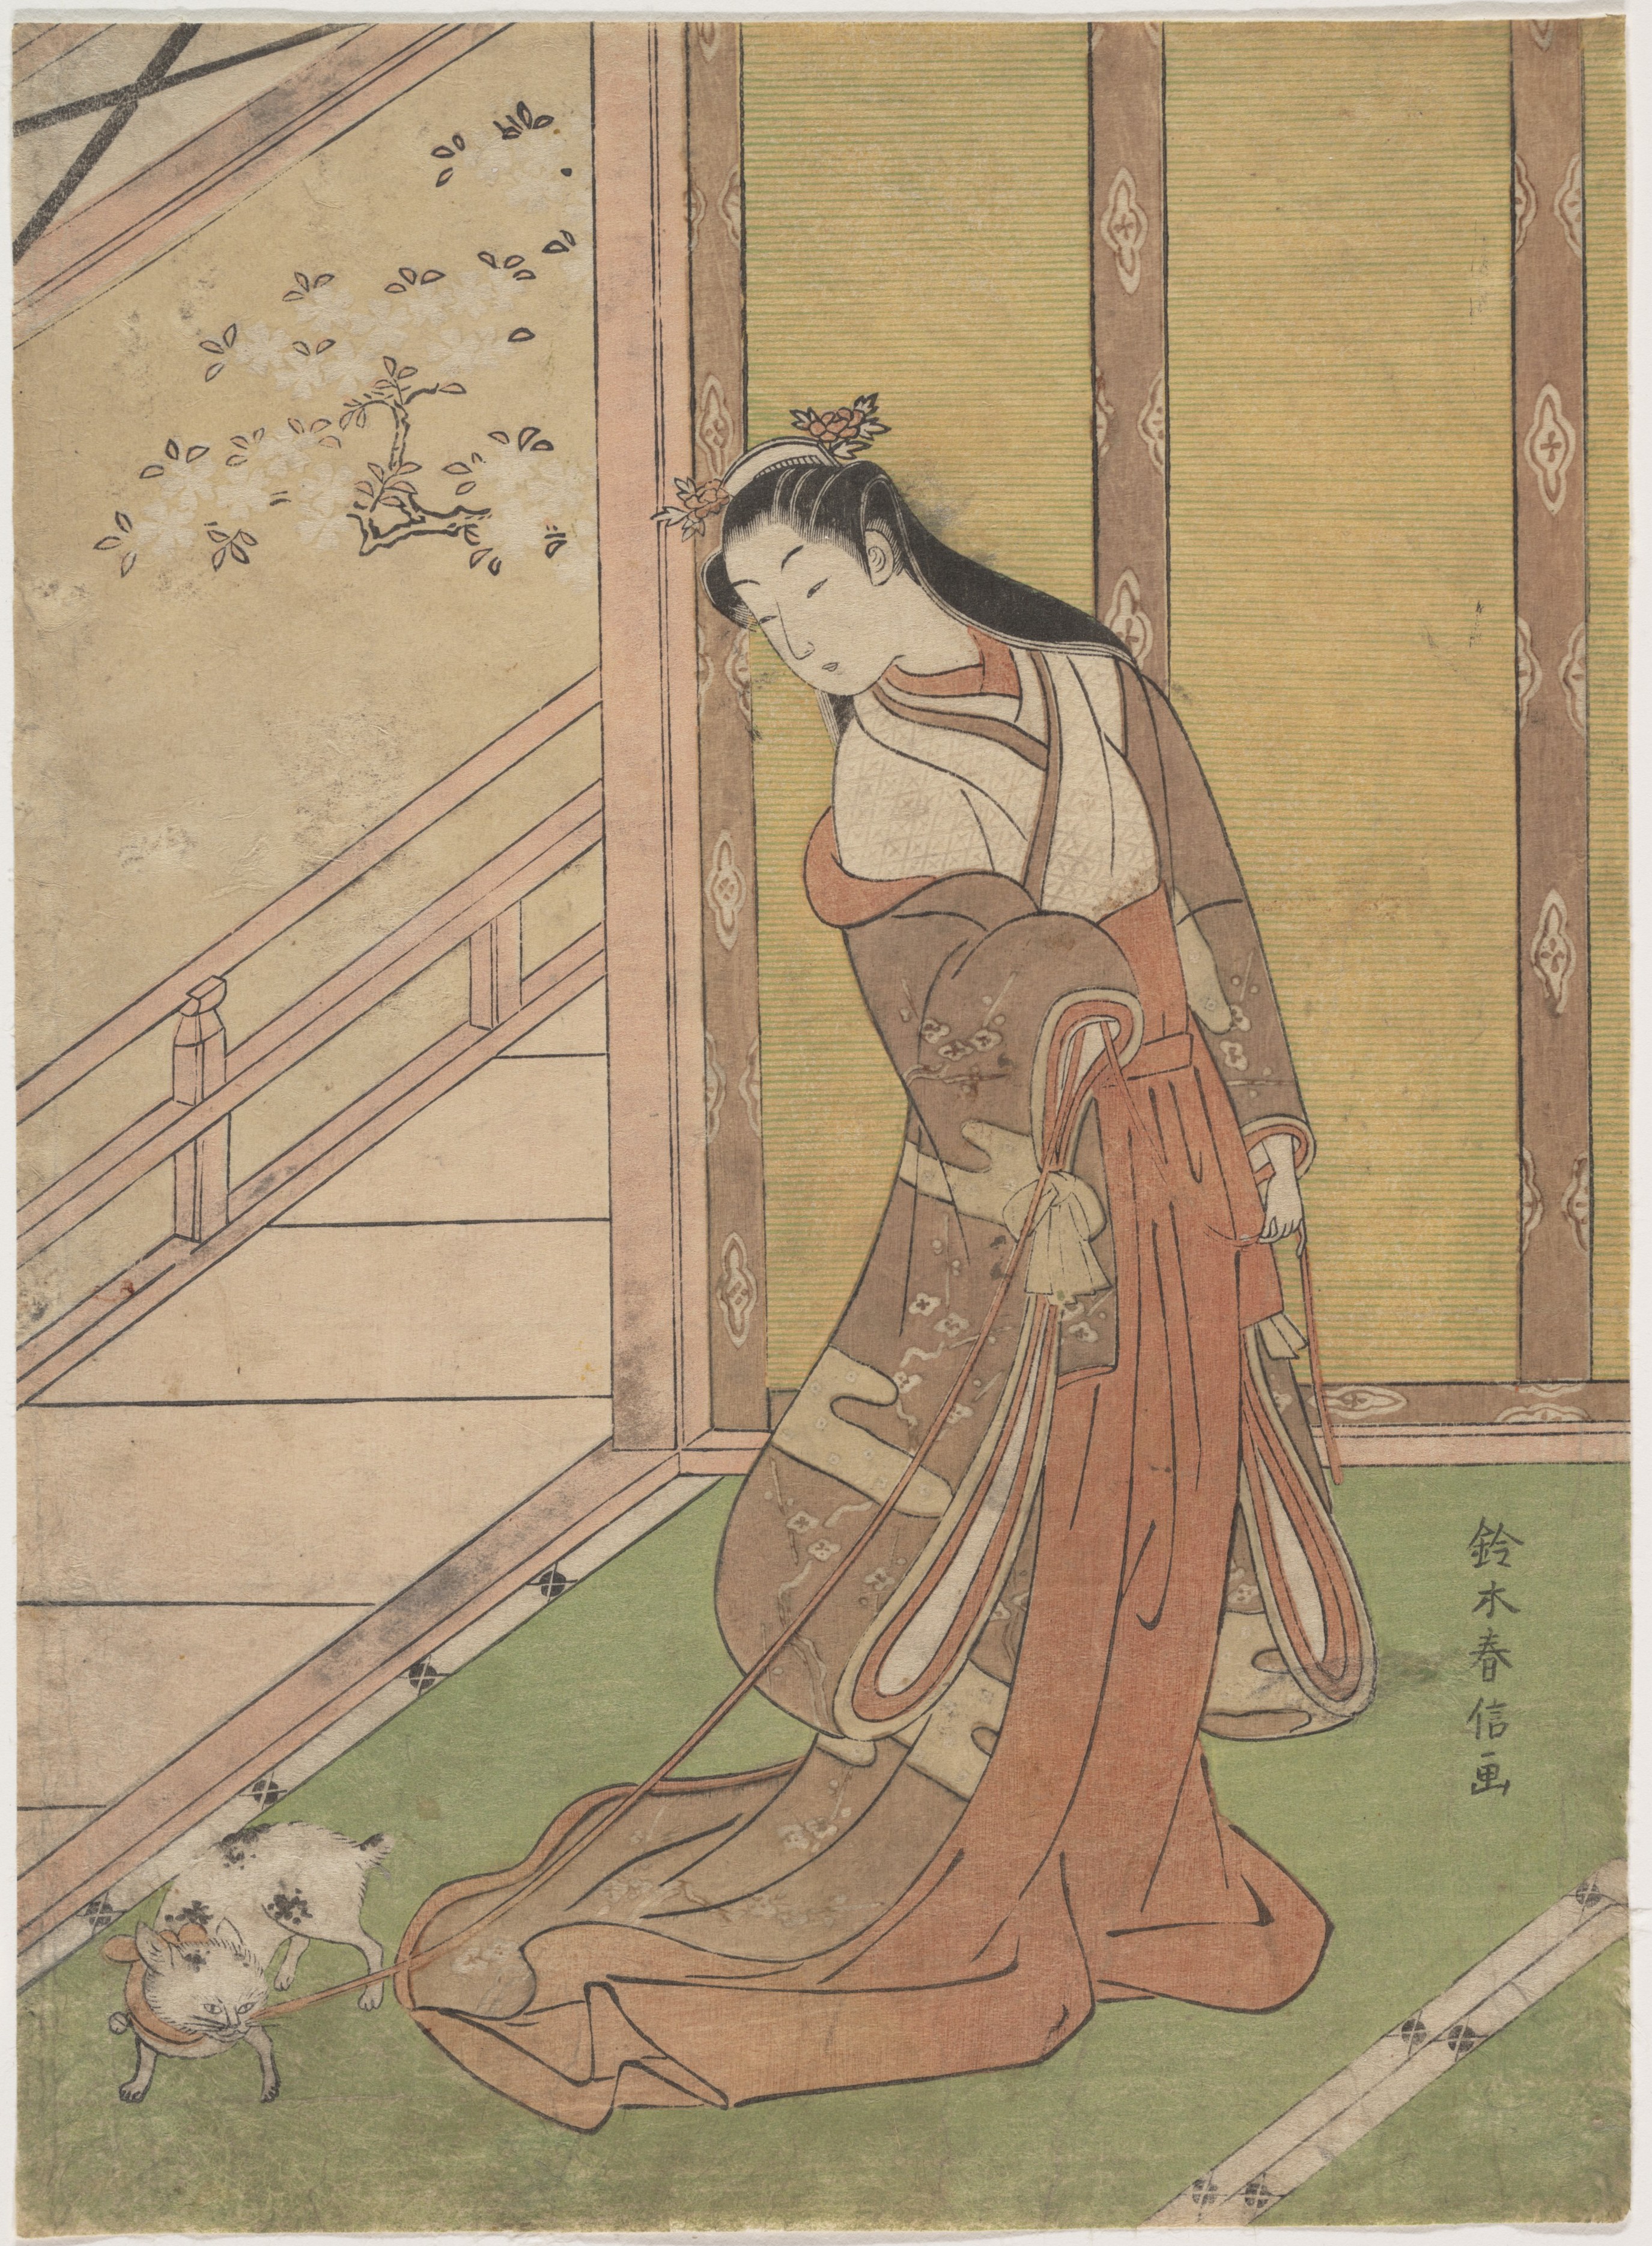 Suzuki Harunobu Onna San No Miya The Third Princess Japan Edo Period 1615 1868 The